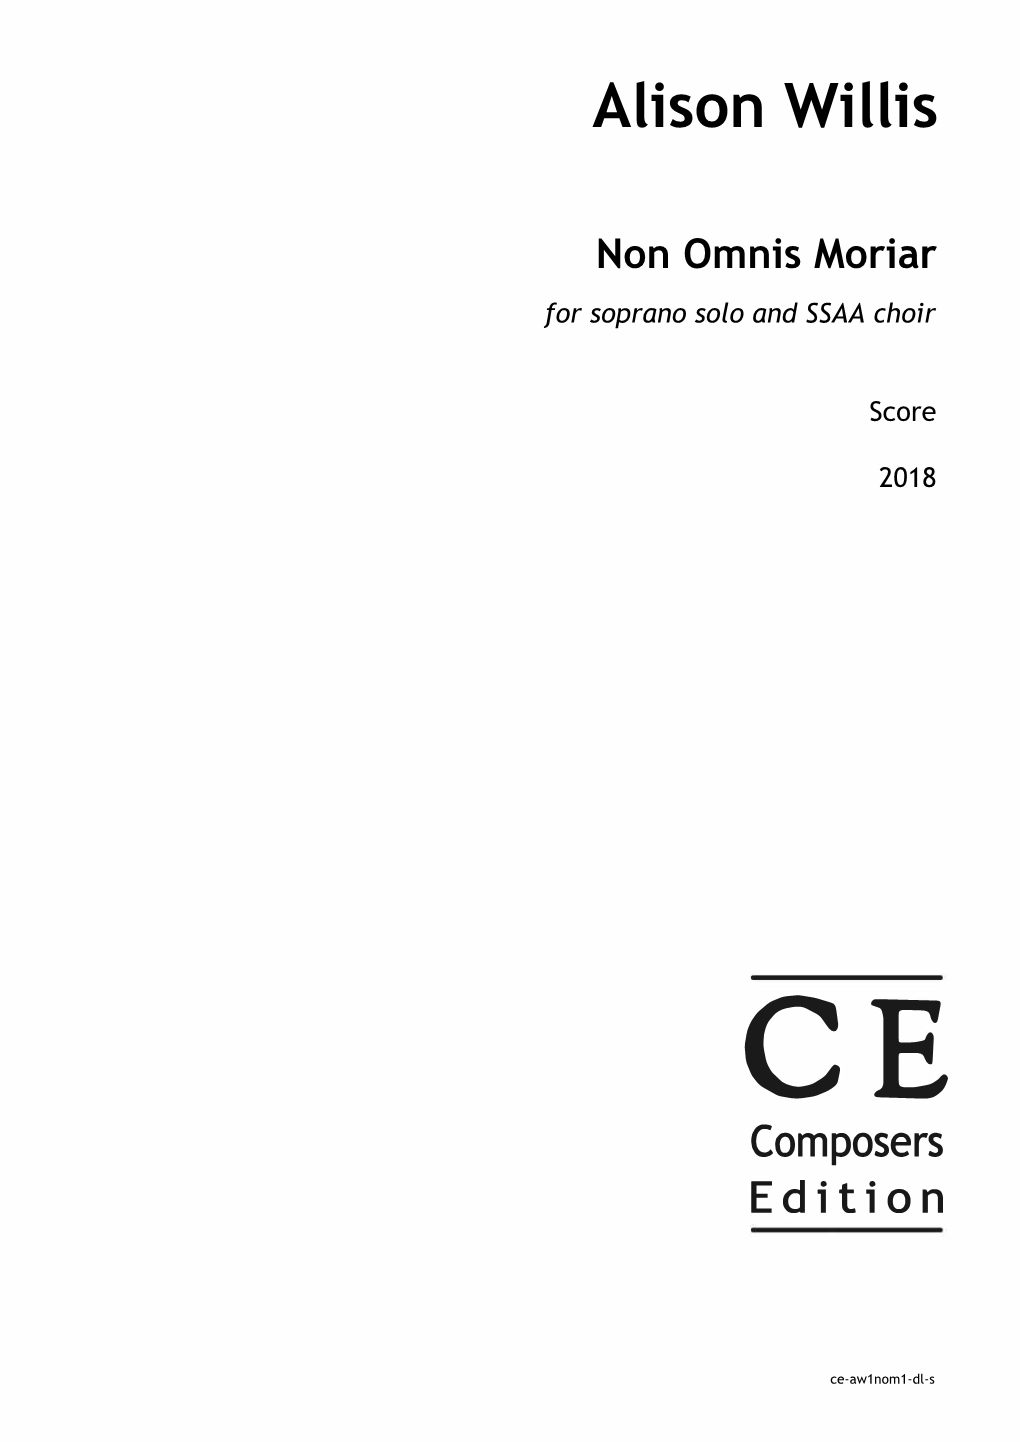 Non Omnis Moriar for Soprano Solo and SSAA Choir